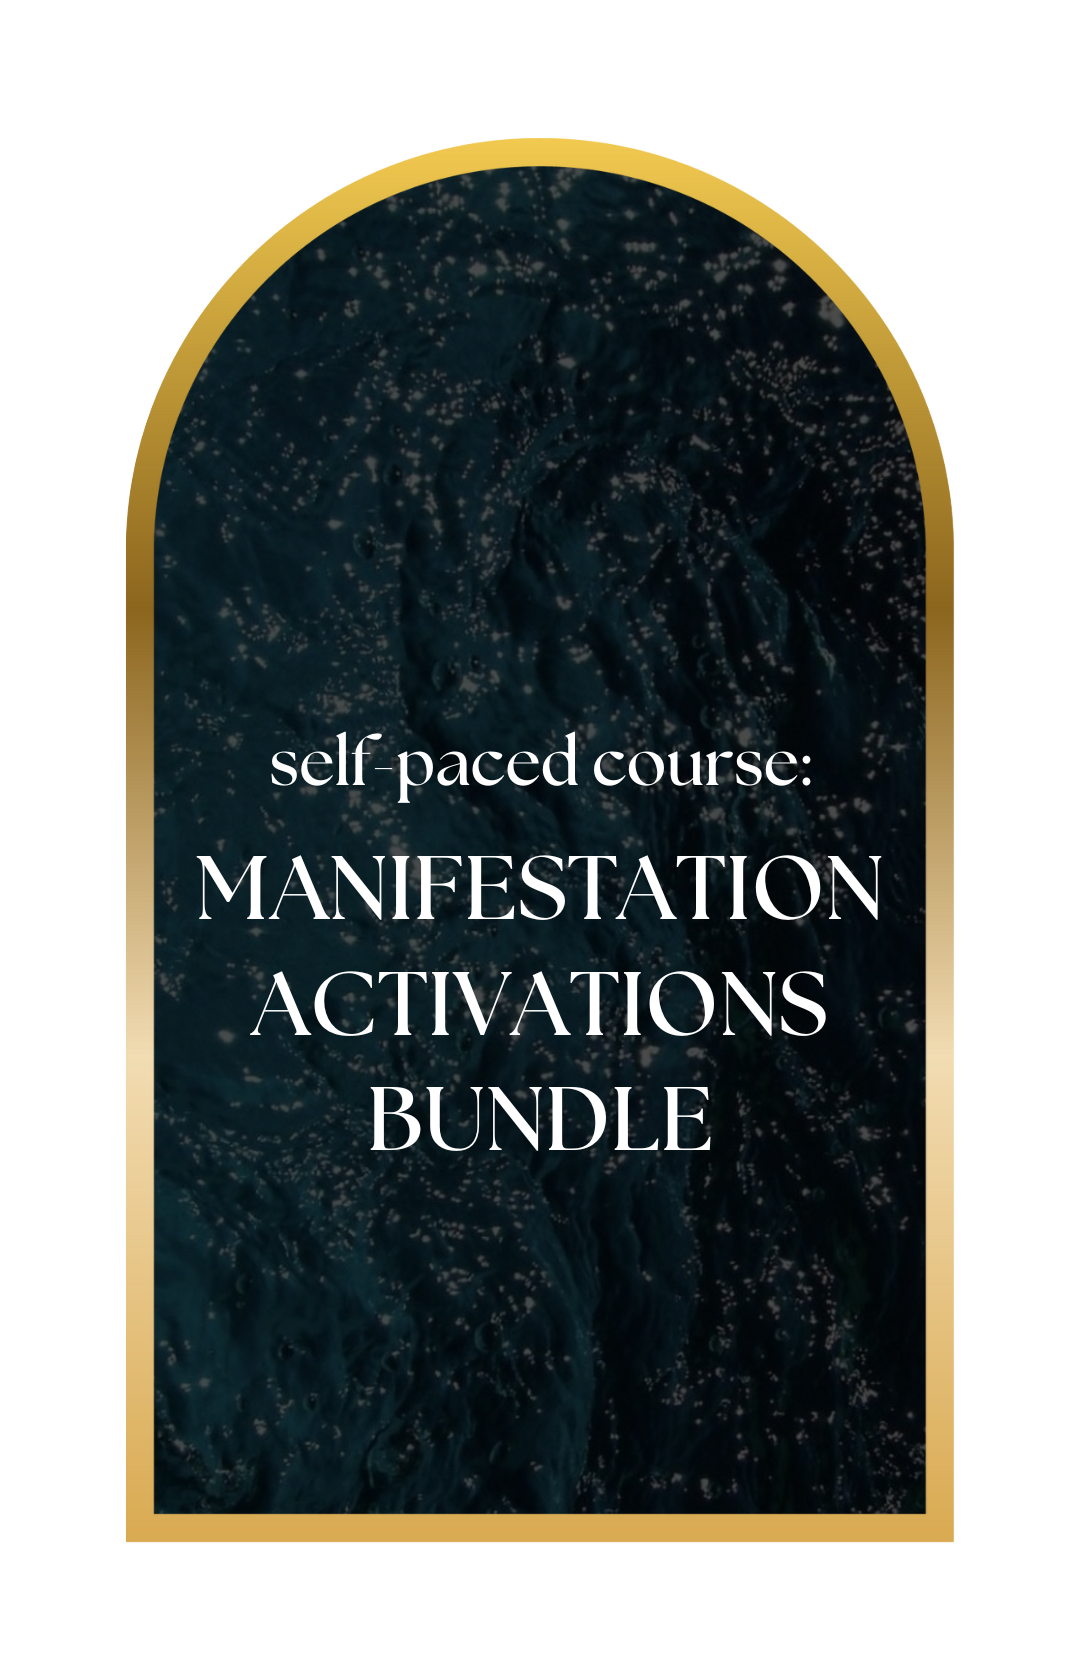 5D Ascension Activator Free Course